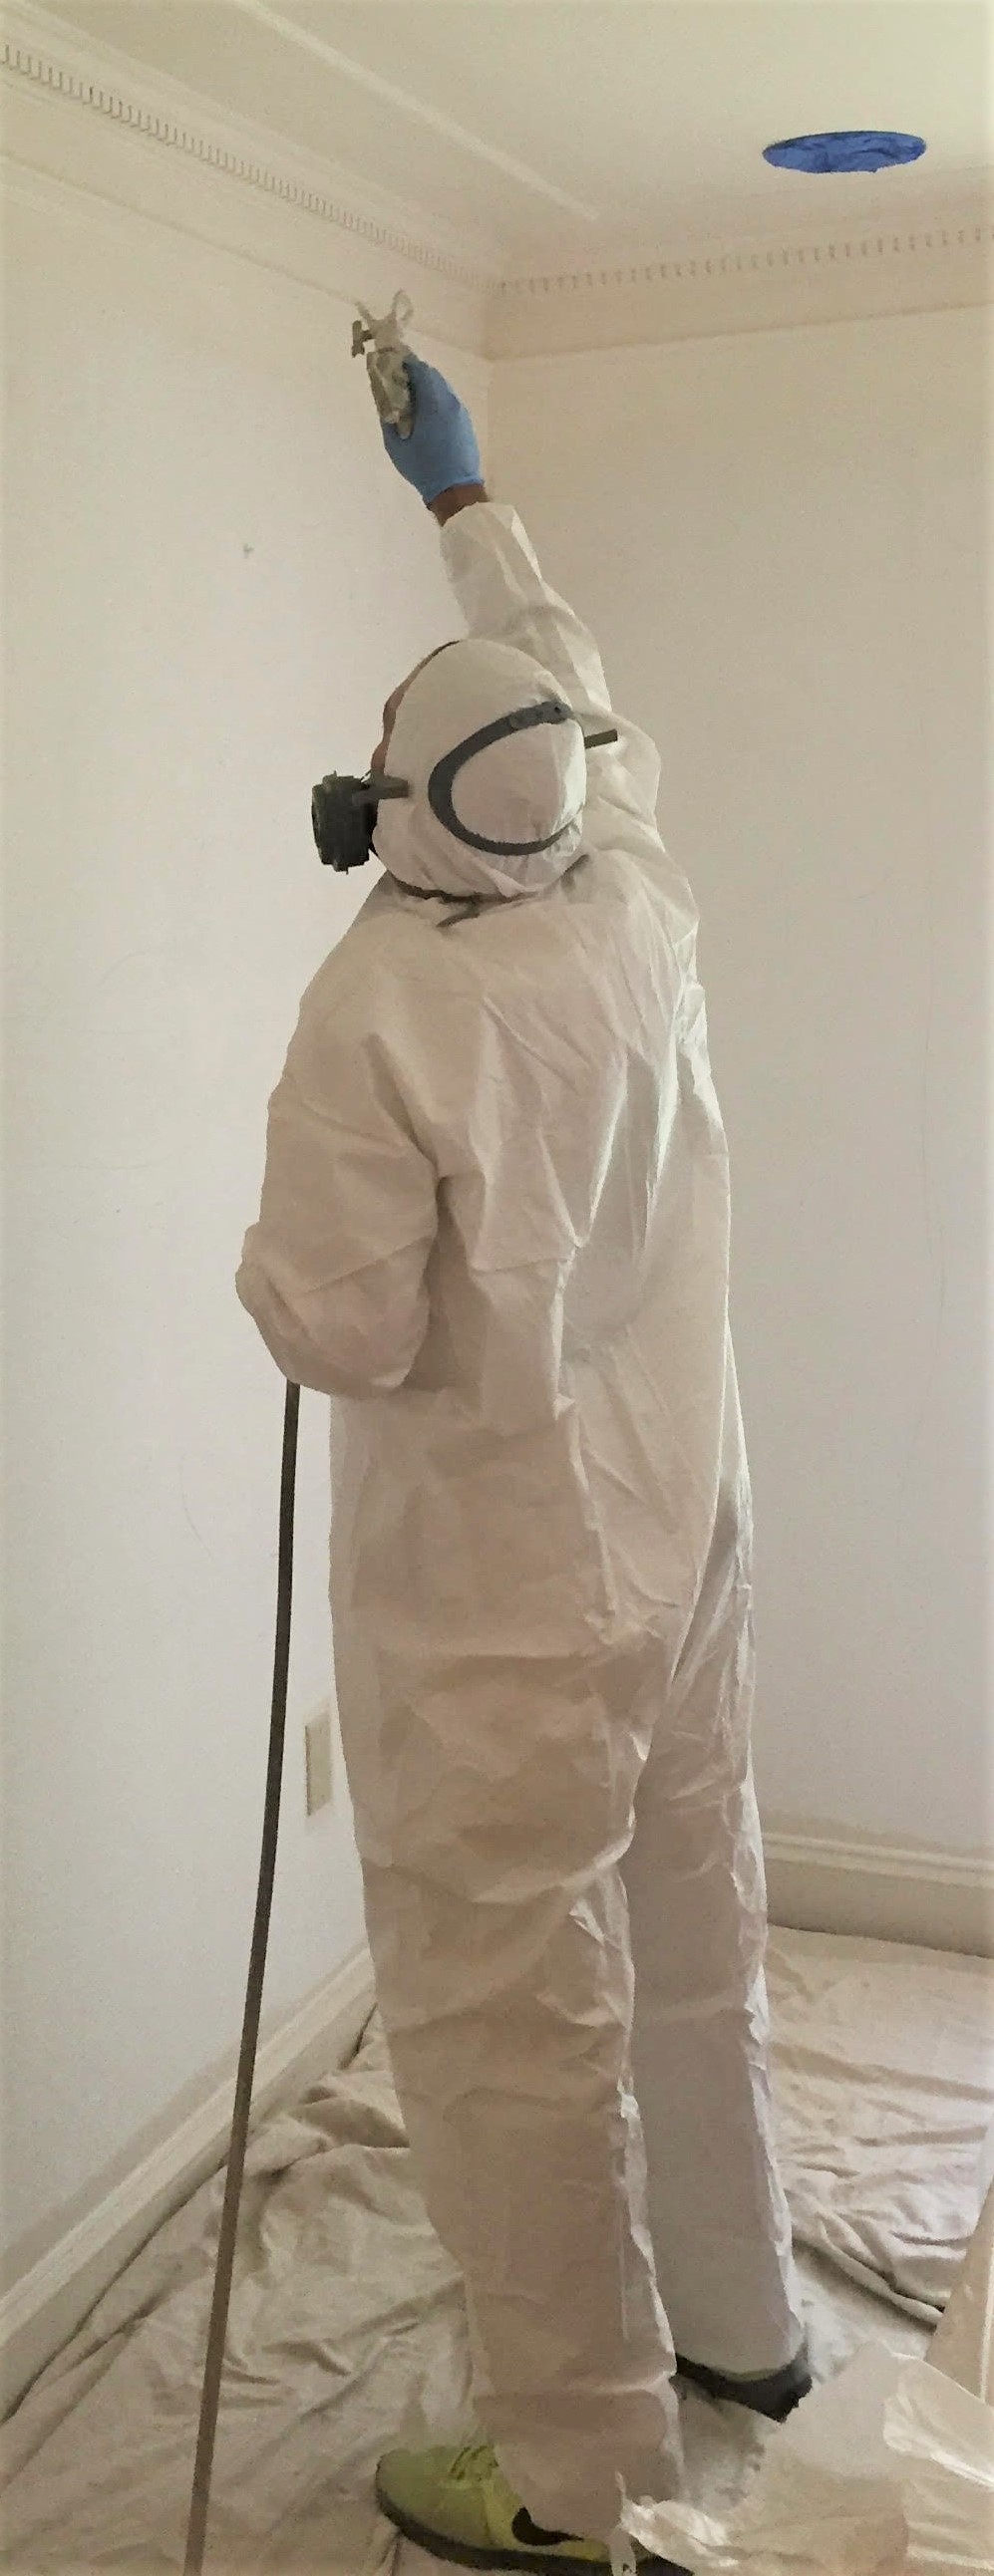 employee spray painting trim white